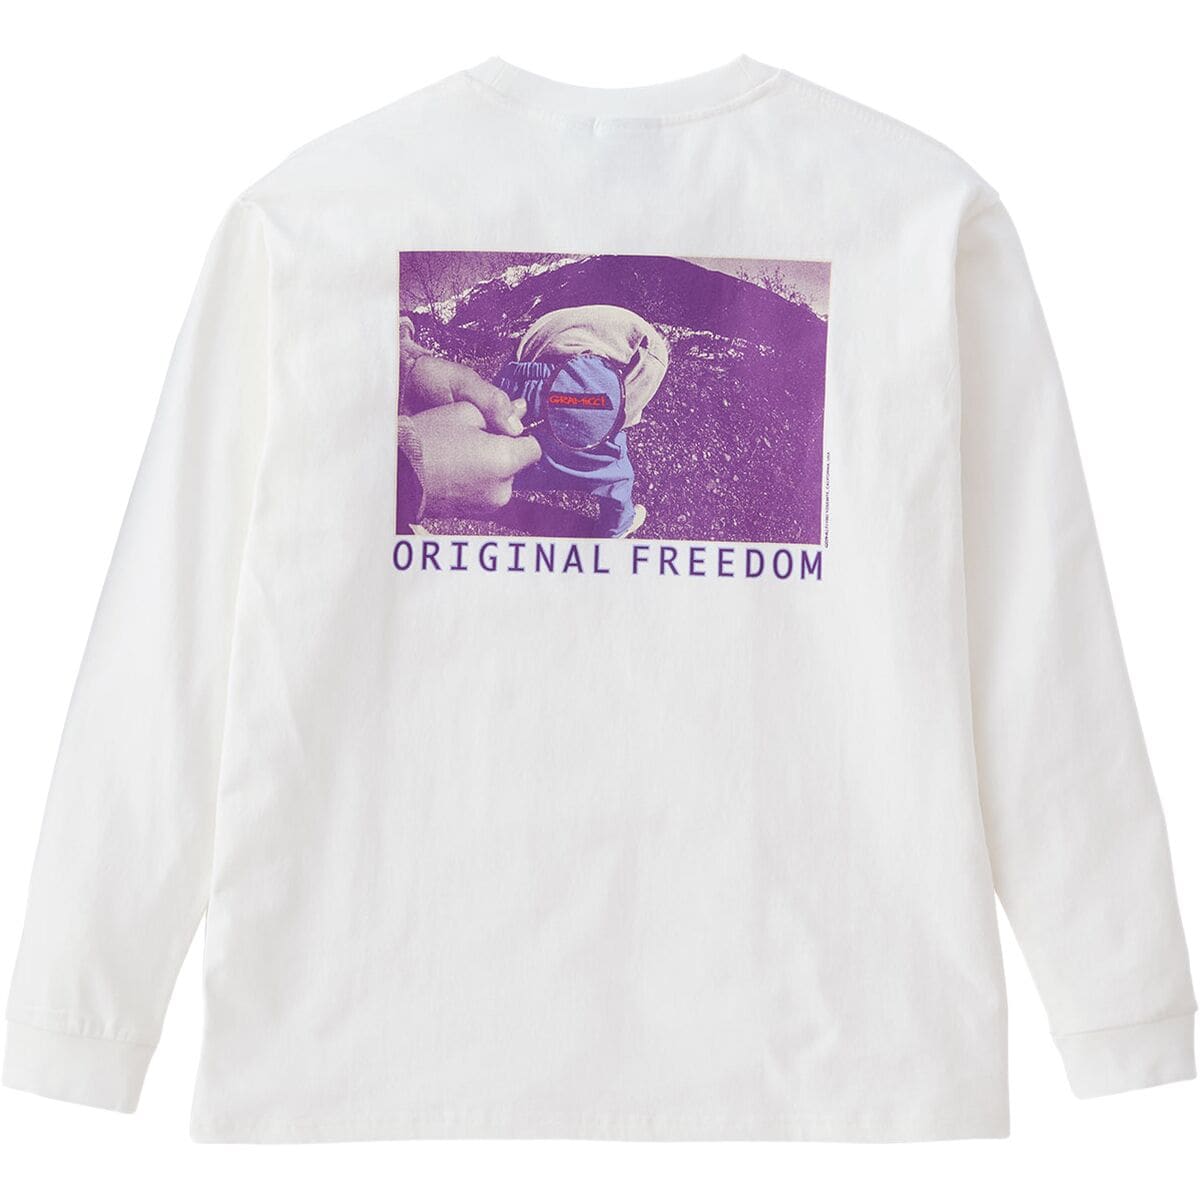 Original Freedom Long-Sleeve T-Shirt - Men